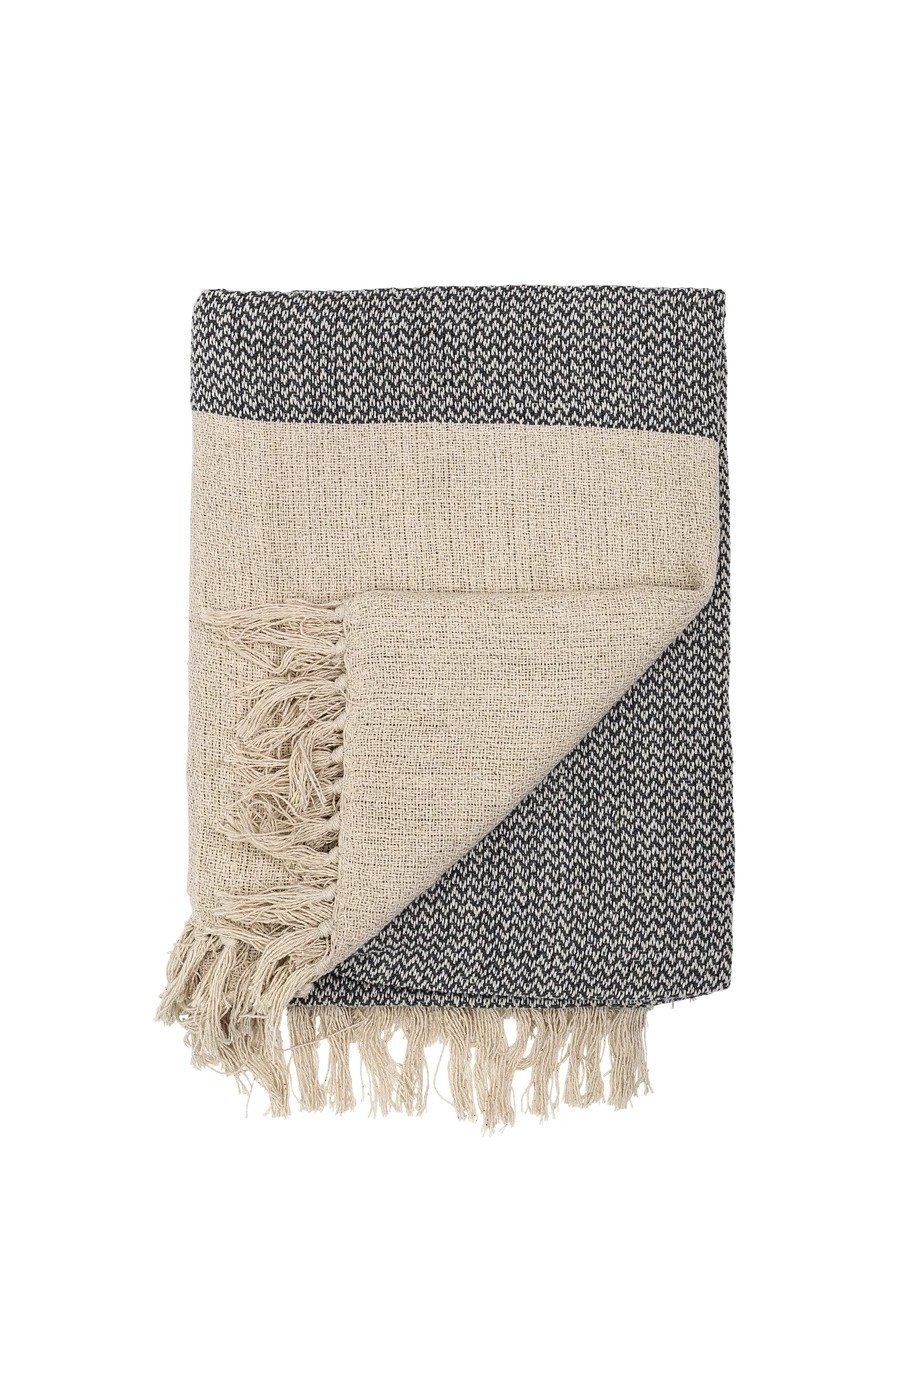 Grey & Cream Cotton Knit Throw with Fringe - Image 1